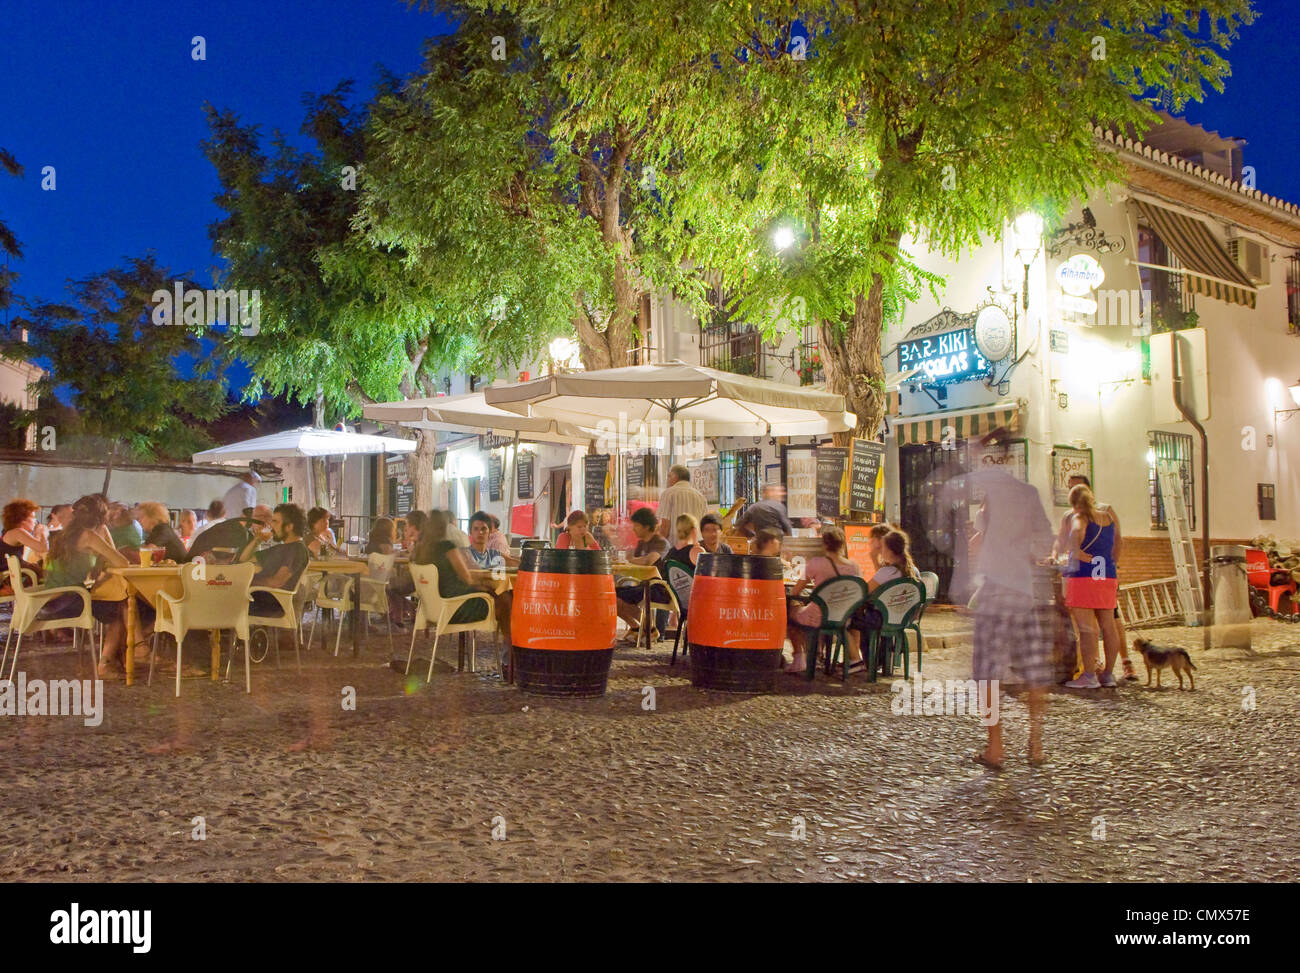 A restaurant in the Albaycin area of Granada City taken at night Stock Photo